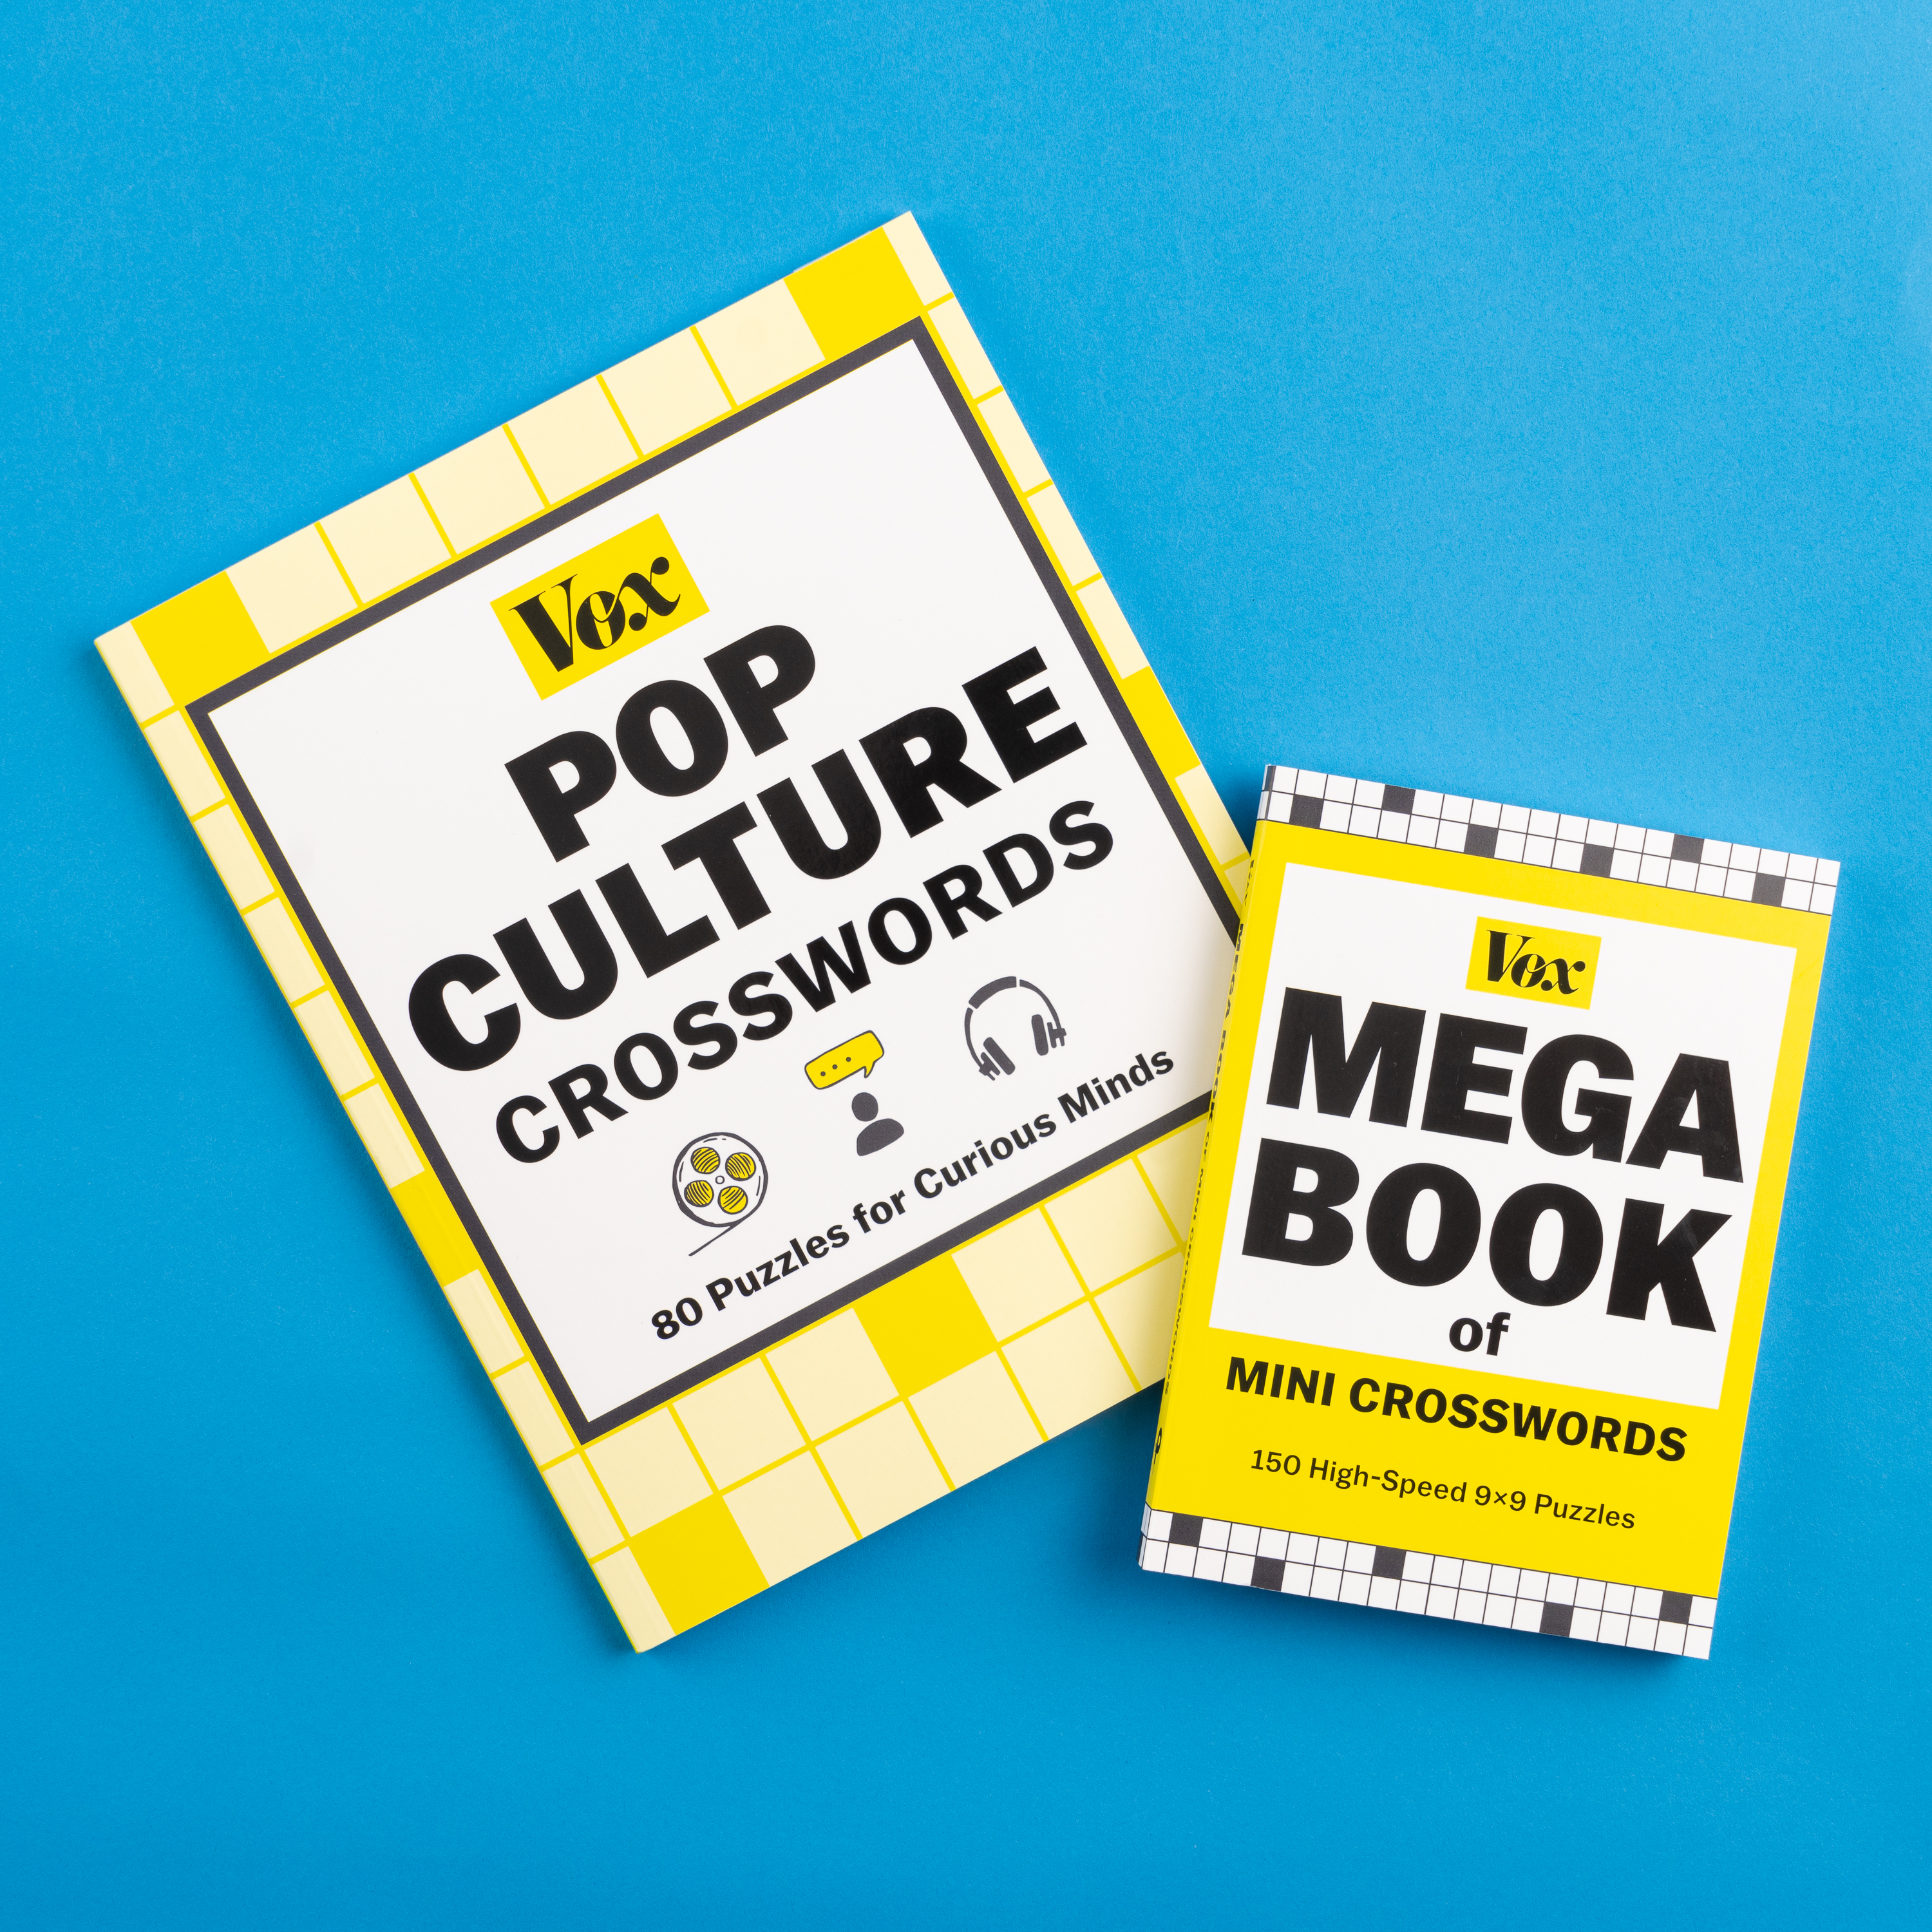 Two crossword books, Vox Pop Culture Crosswords and Vox Mega Book of Mini Crosswords.